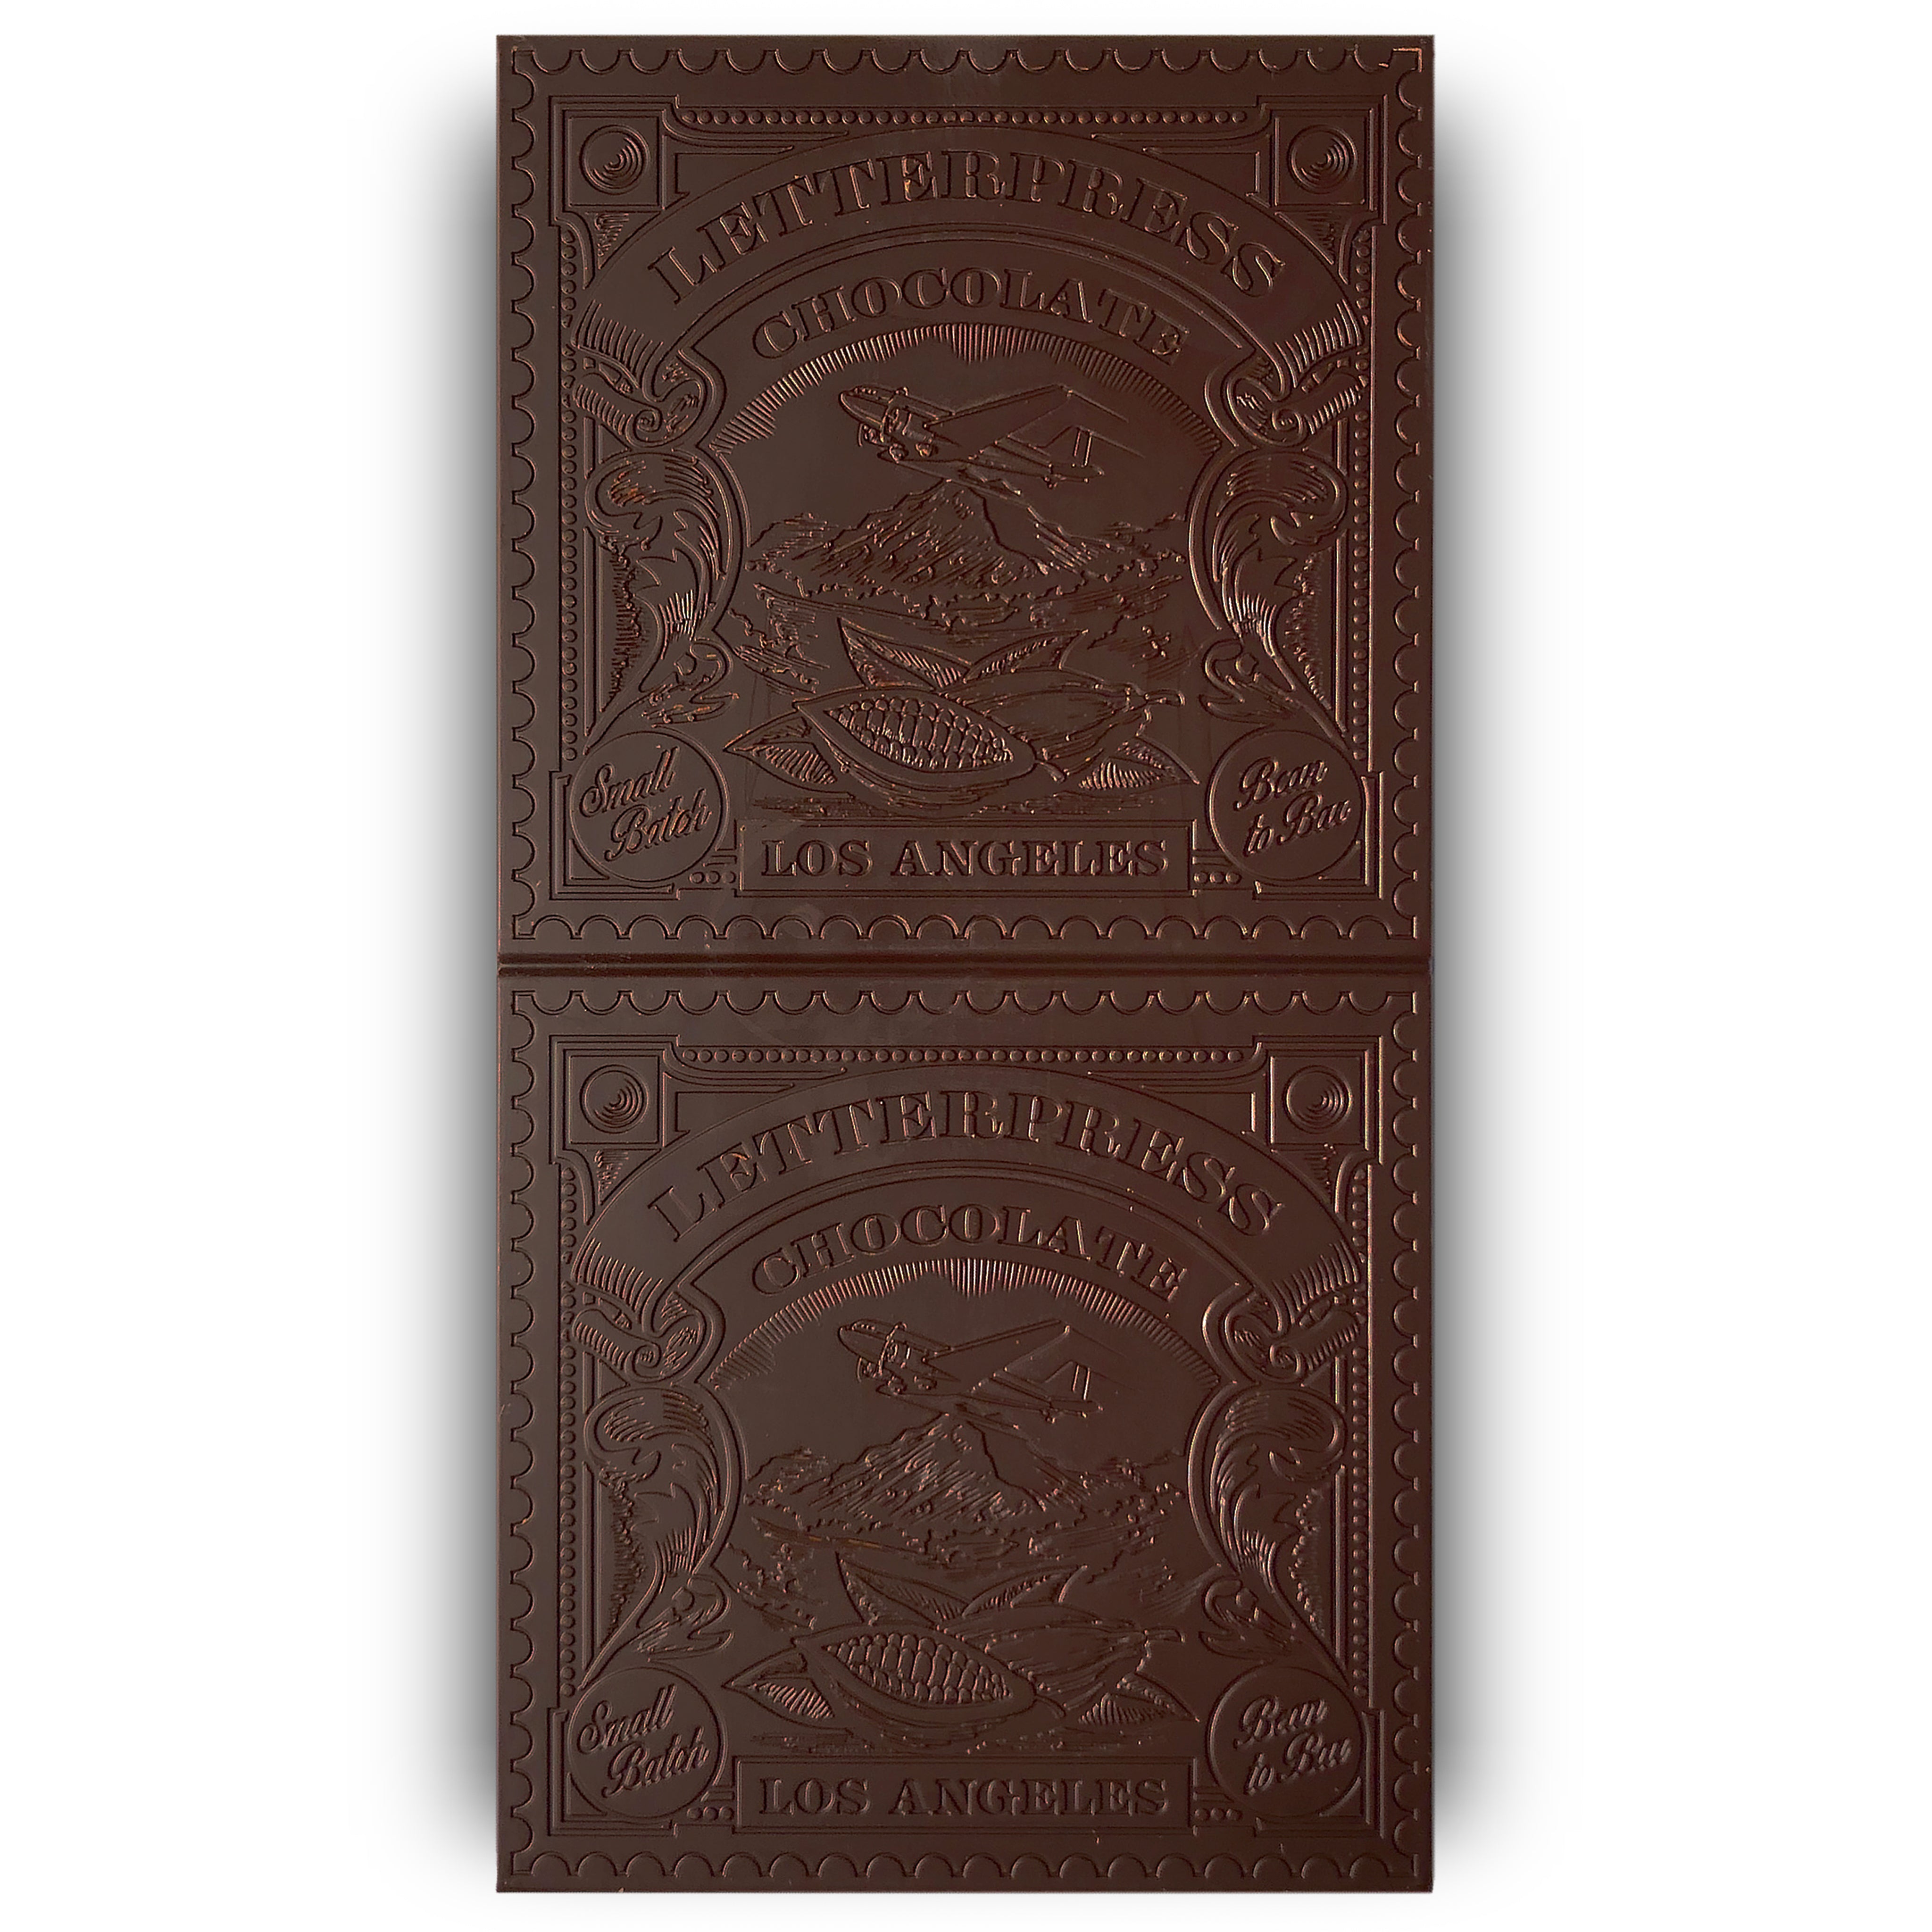 Ucayali 70% Dark Chocolate bar on white background